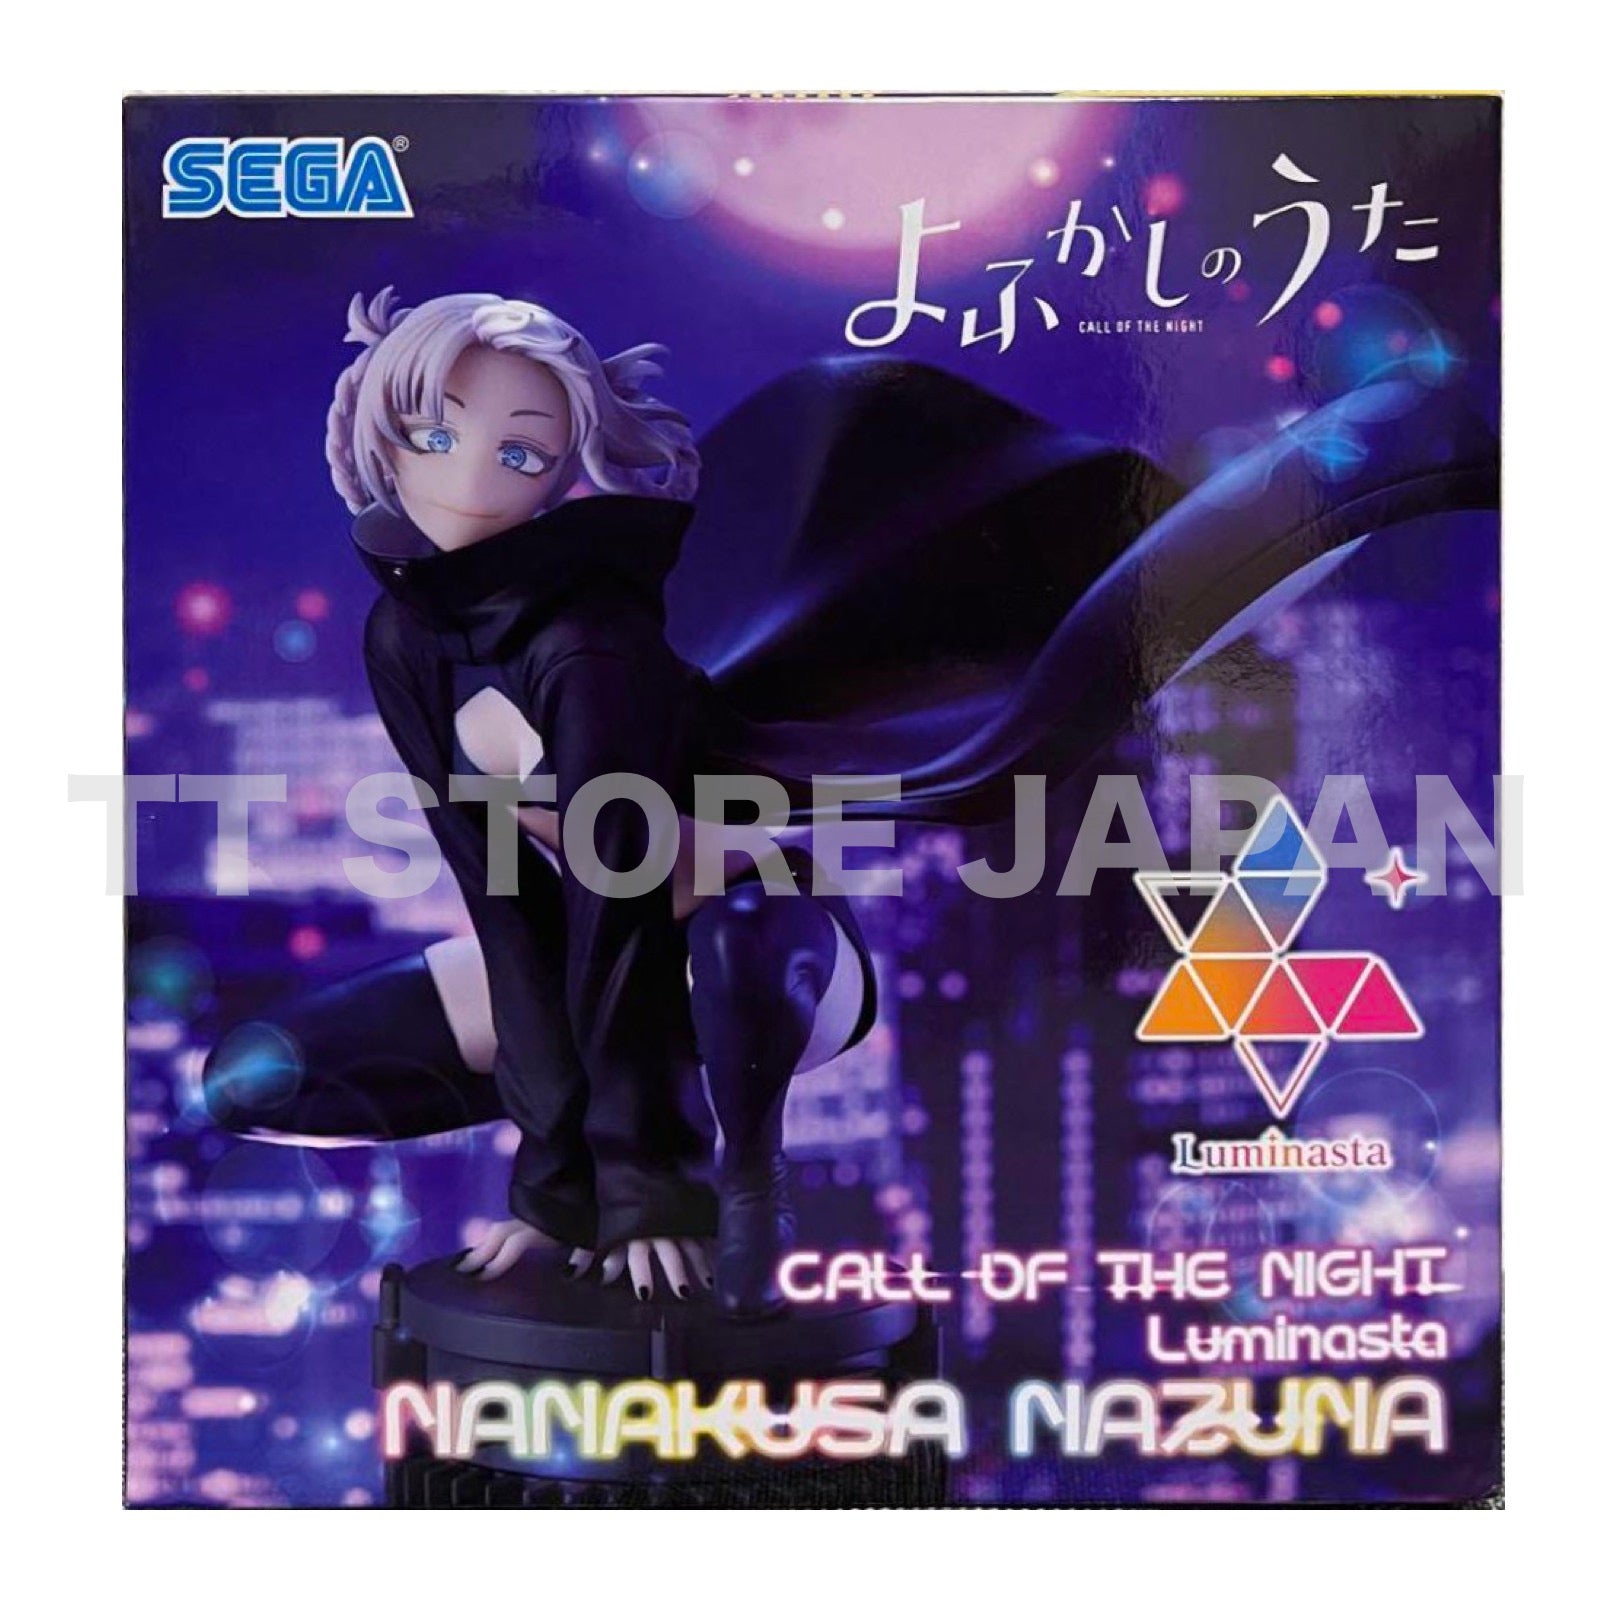 Call Night Nazuna Figure, Call Night Anime